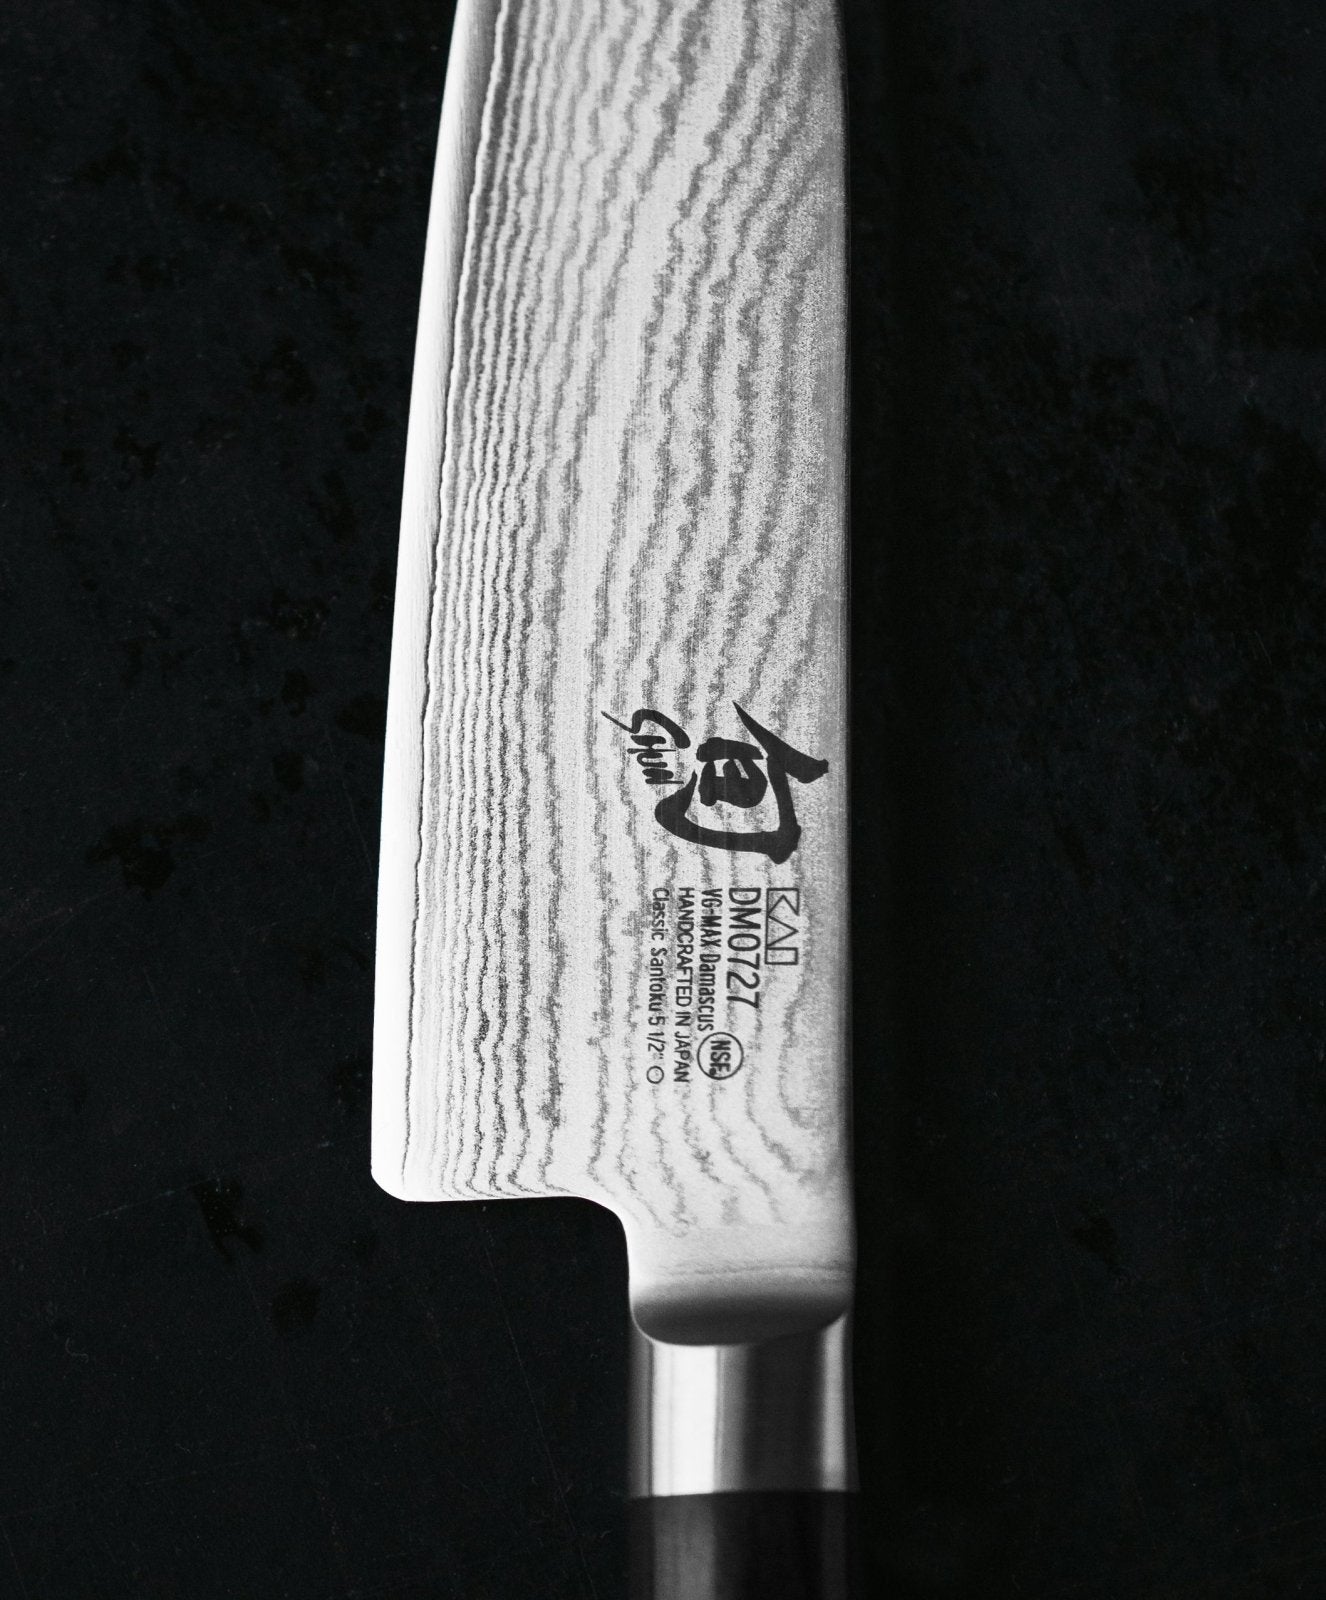 KAI Shun 18cm Scalloped Santoku Knife - KAI-DM-0718 - The Cotswold Knife Company